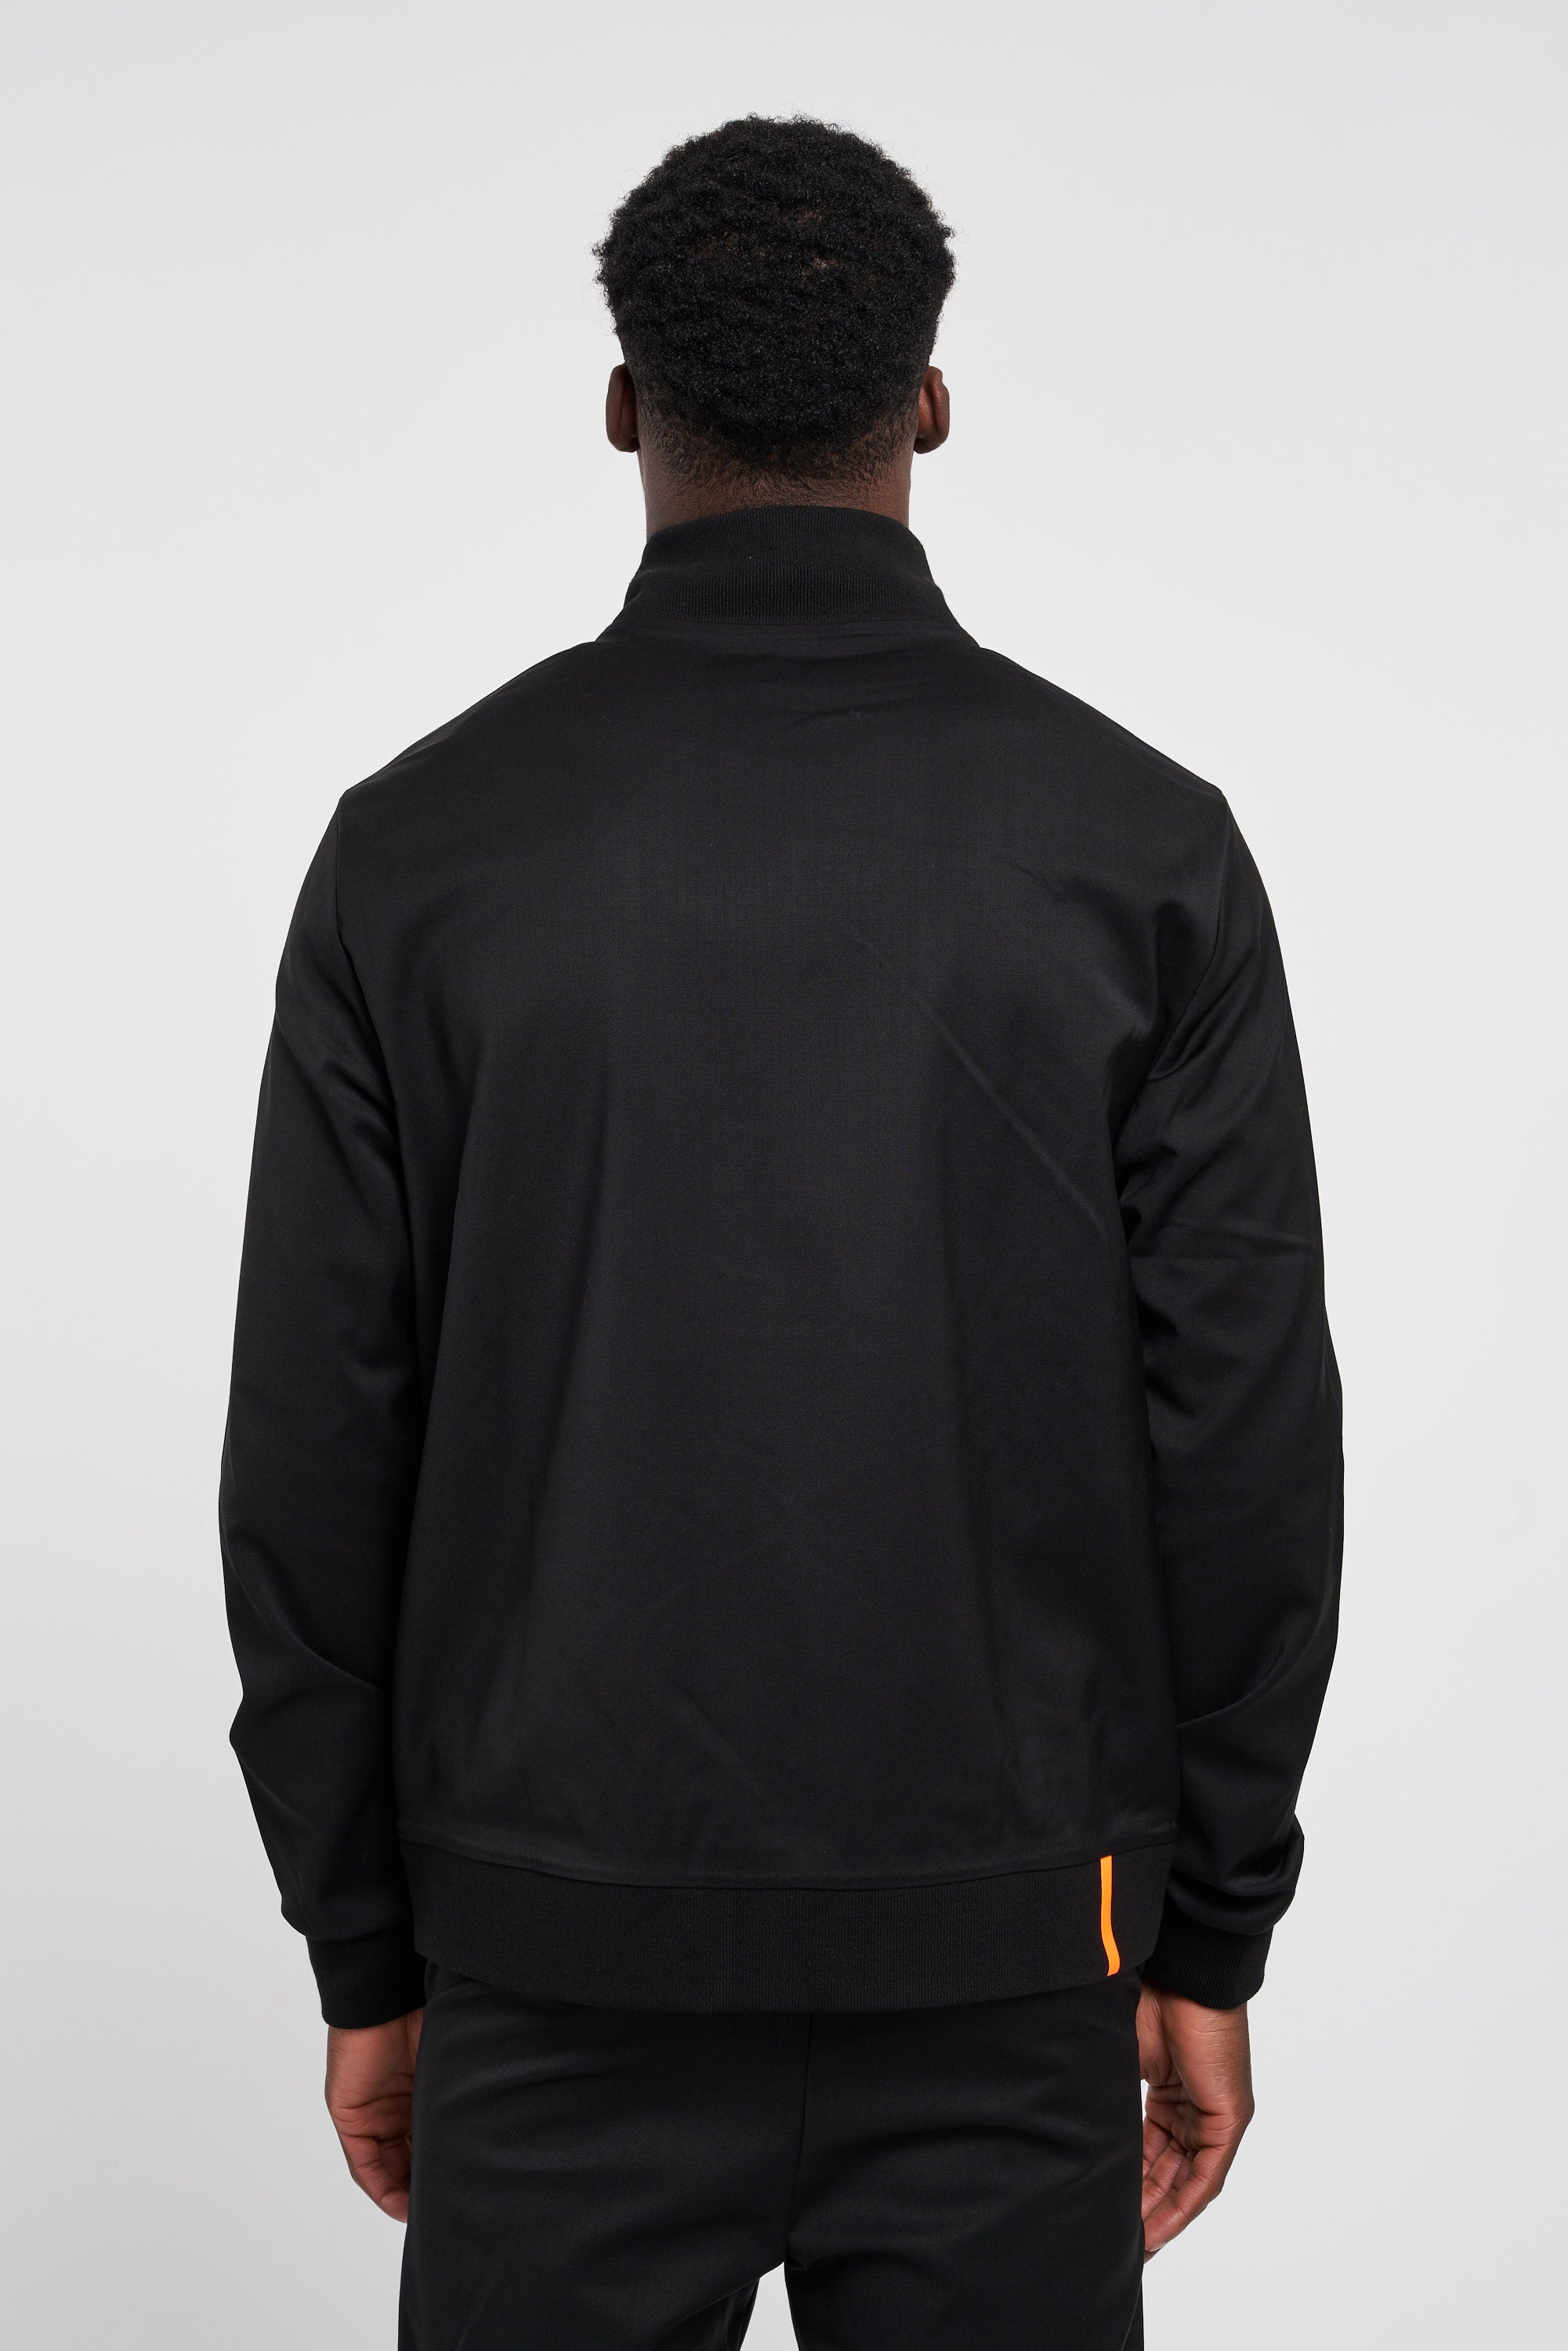 RRD Terzilio Wool / Elastane Zip Sweatshirt Black-4